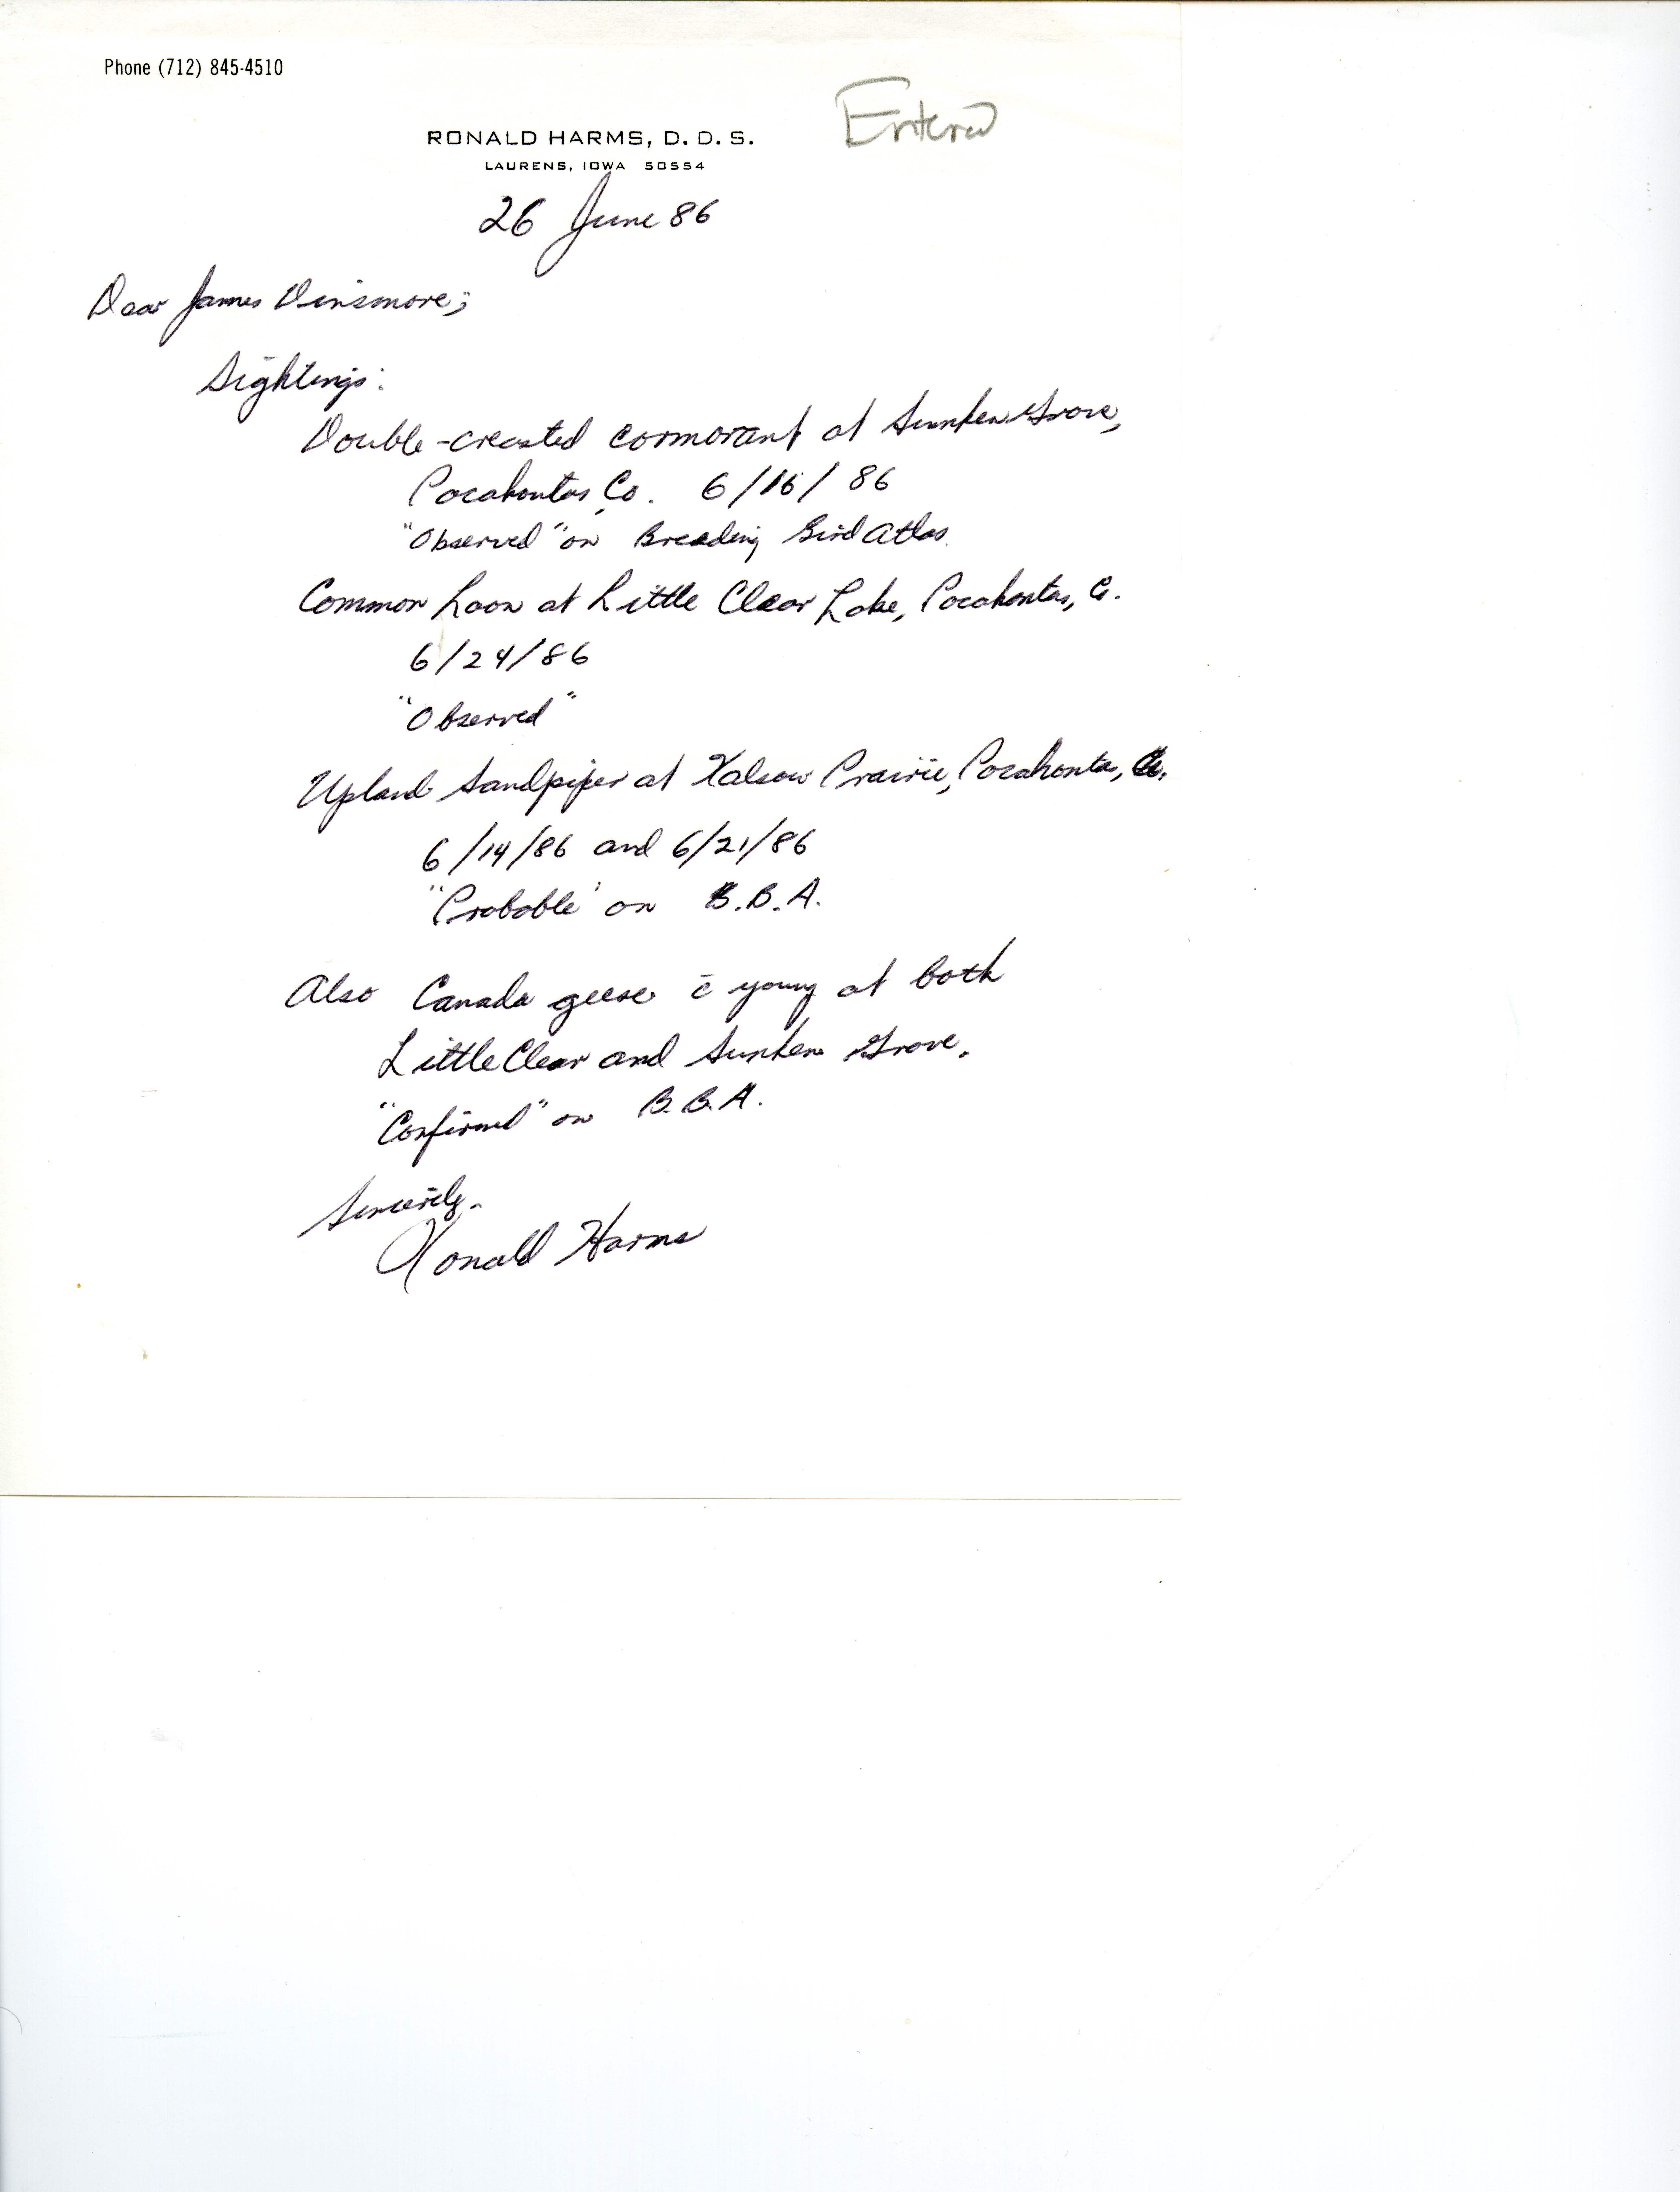 Ronald Harms letter to James J. Dinsmore regarding bird sightings, June 26, 1986